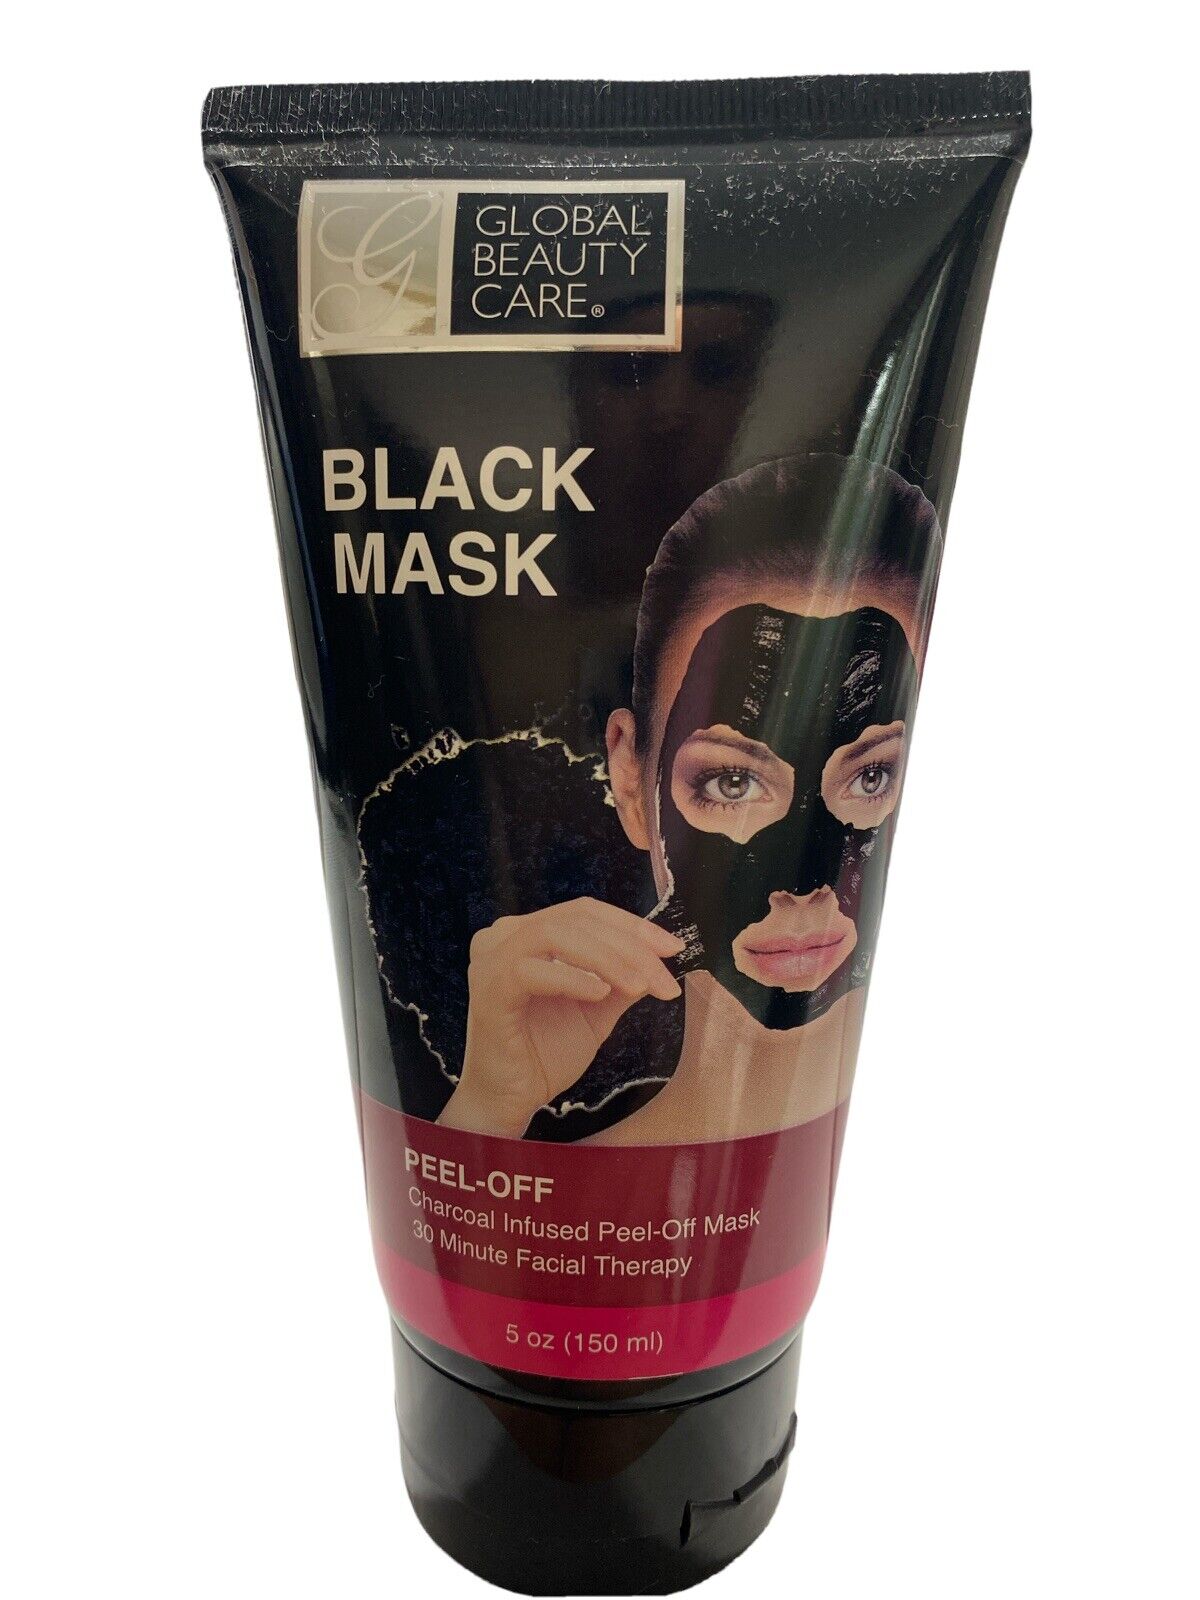 Global Beauty Care Black Mask: Charcoal Infused Peel-Off Mask 5oz